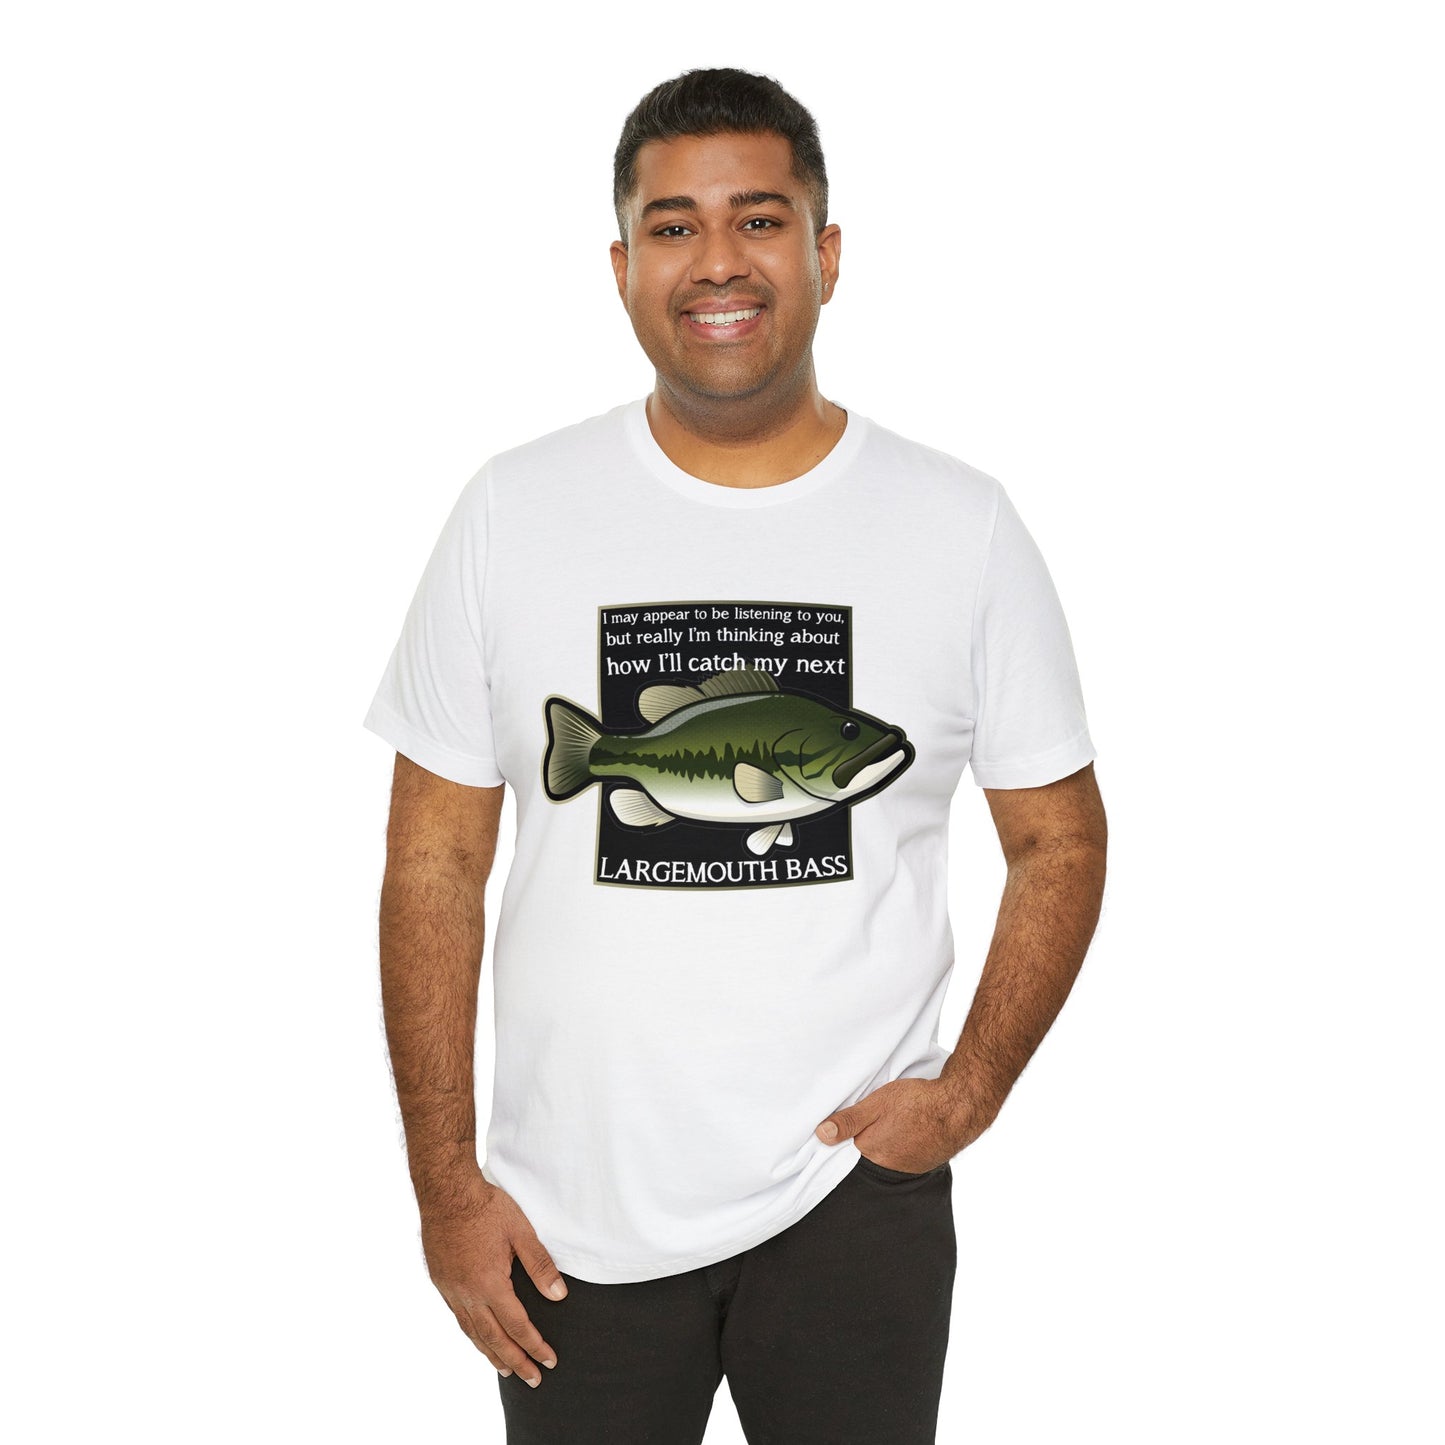 "Not Listening" Largemouth Bass Fishing T Shirt